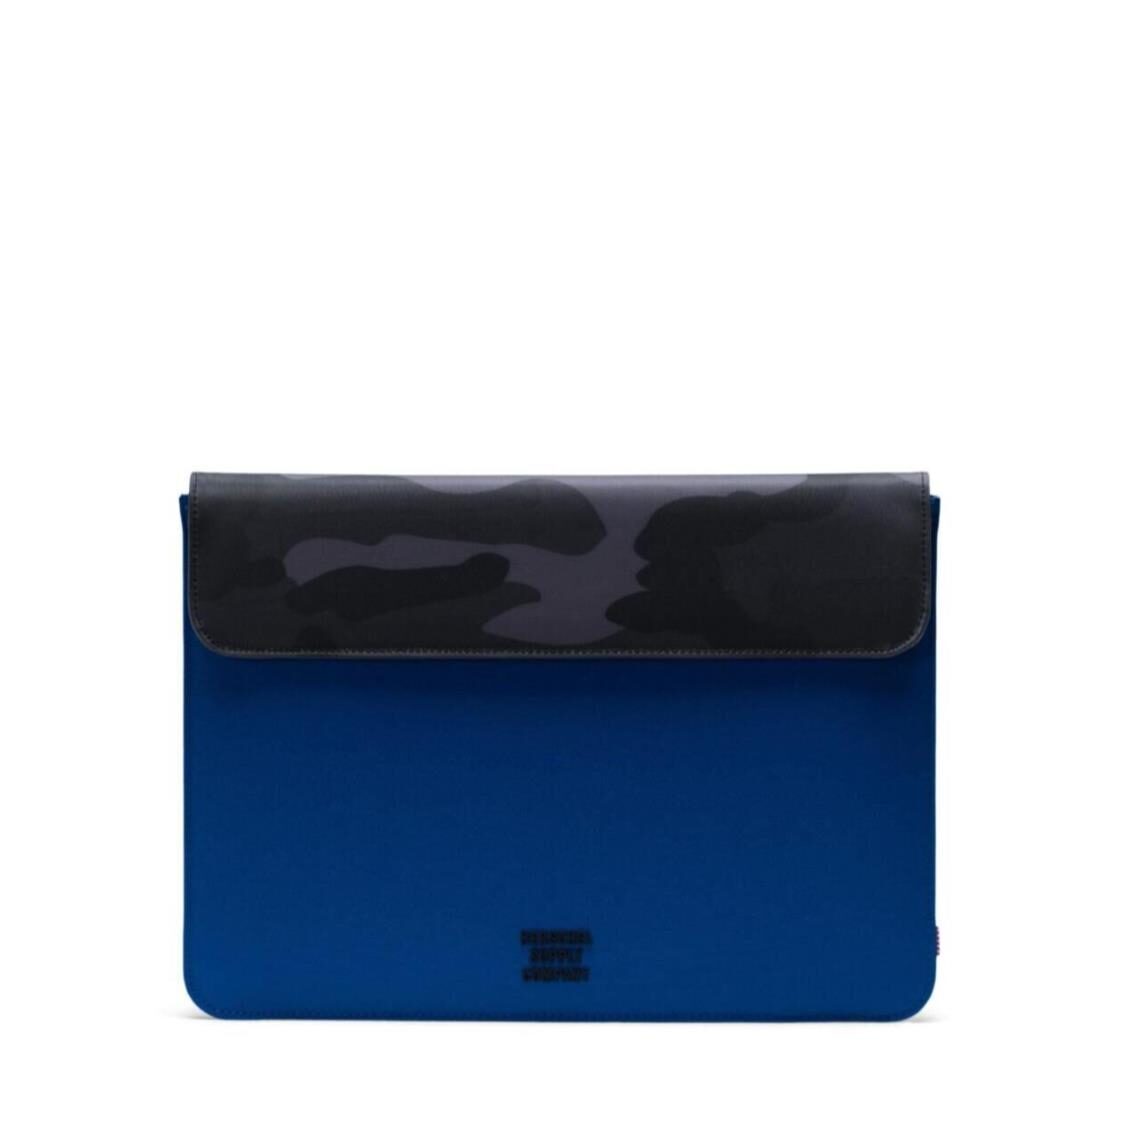 Herschel Spokane Sleeve for new 13 inch MacBook - Surf The WebNight Camo Laptop Case